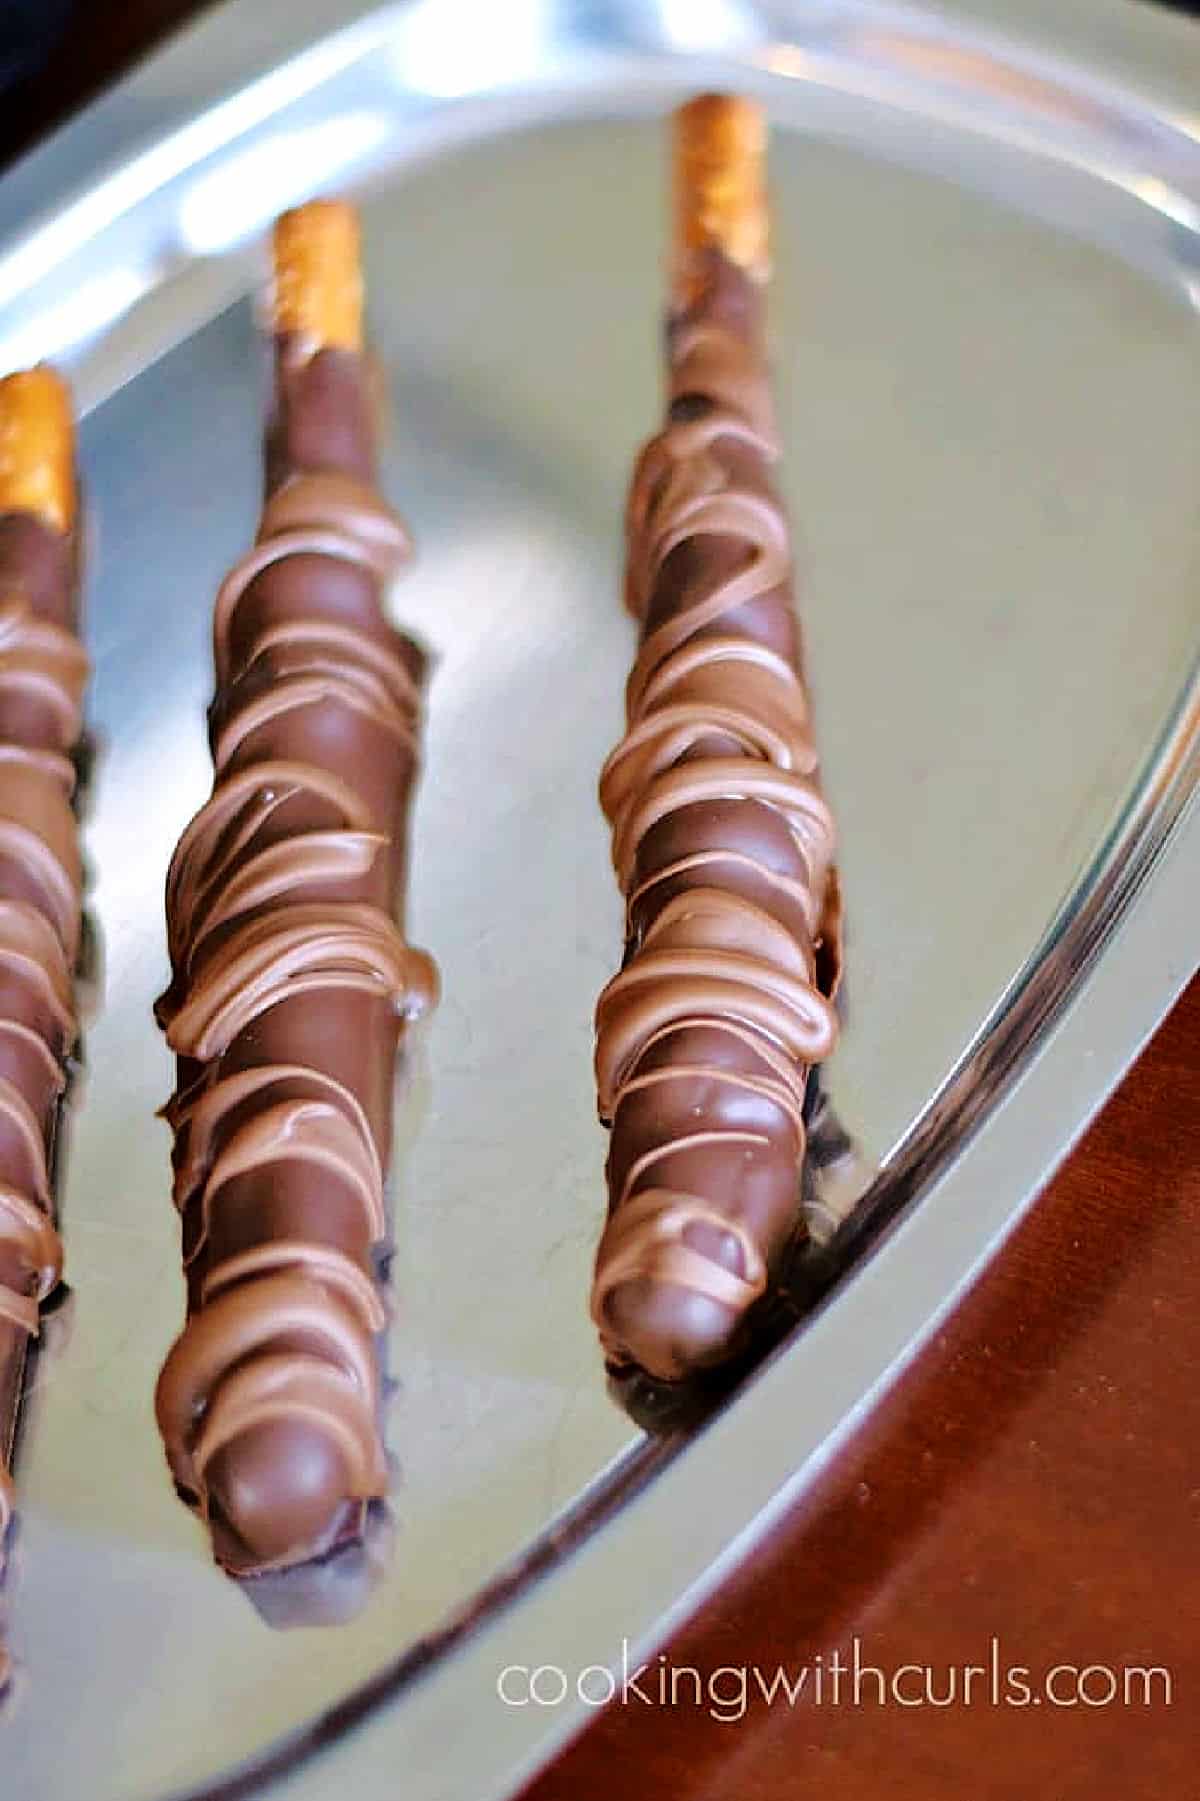 Three Chocolate Caramel Pretzel Rods on a silver tray. 